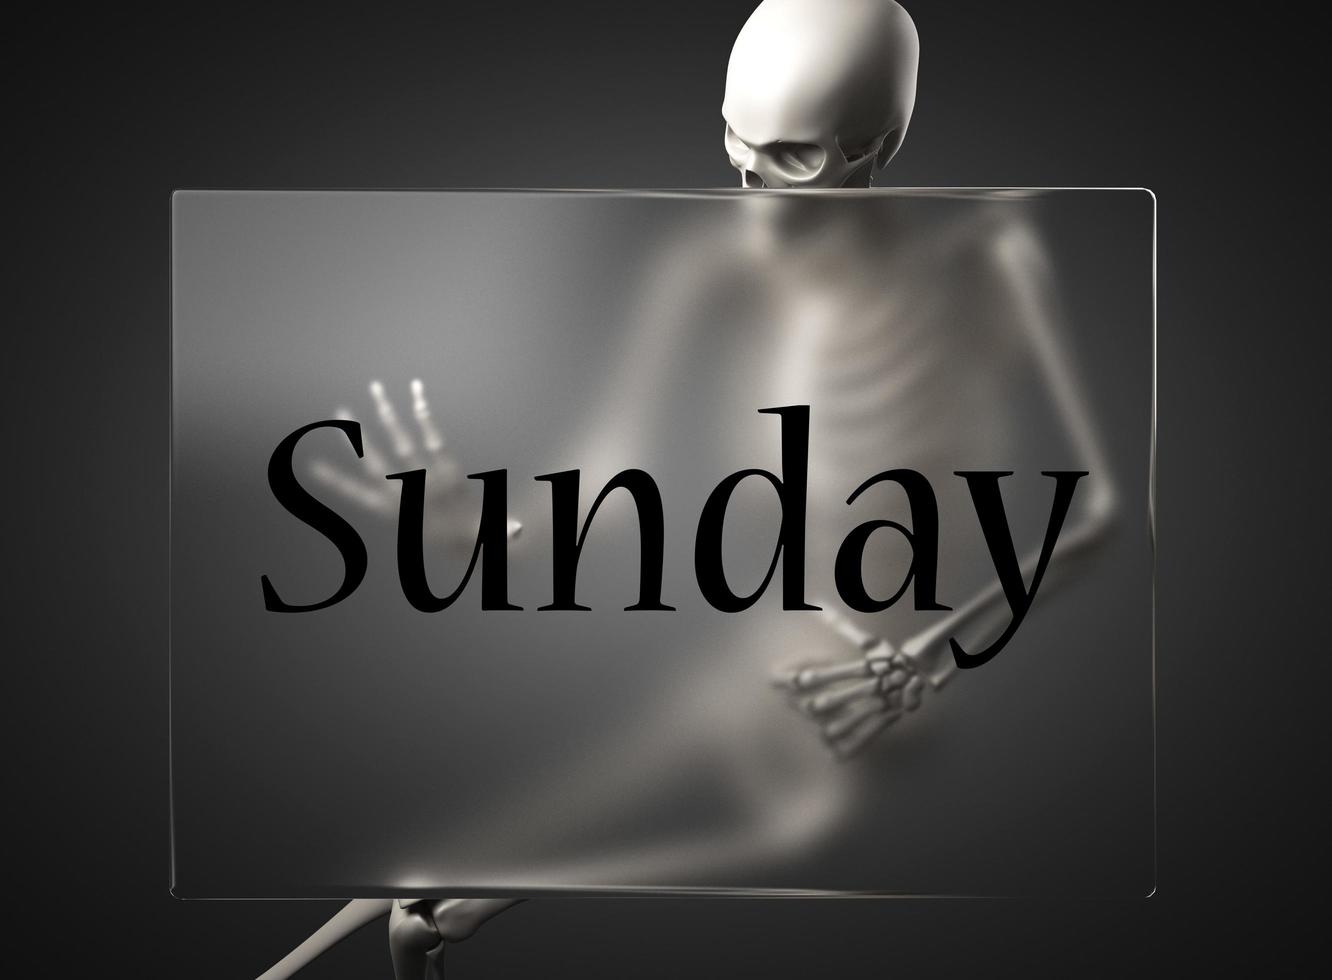 Sunday word on glass and skeleton photo